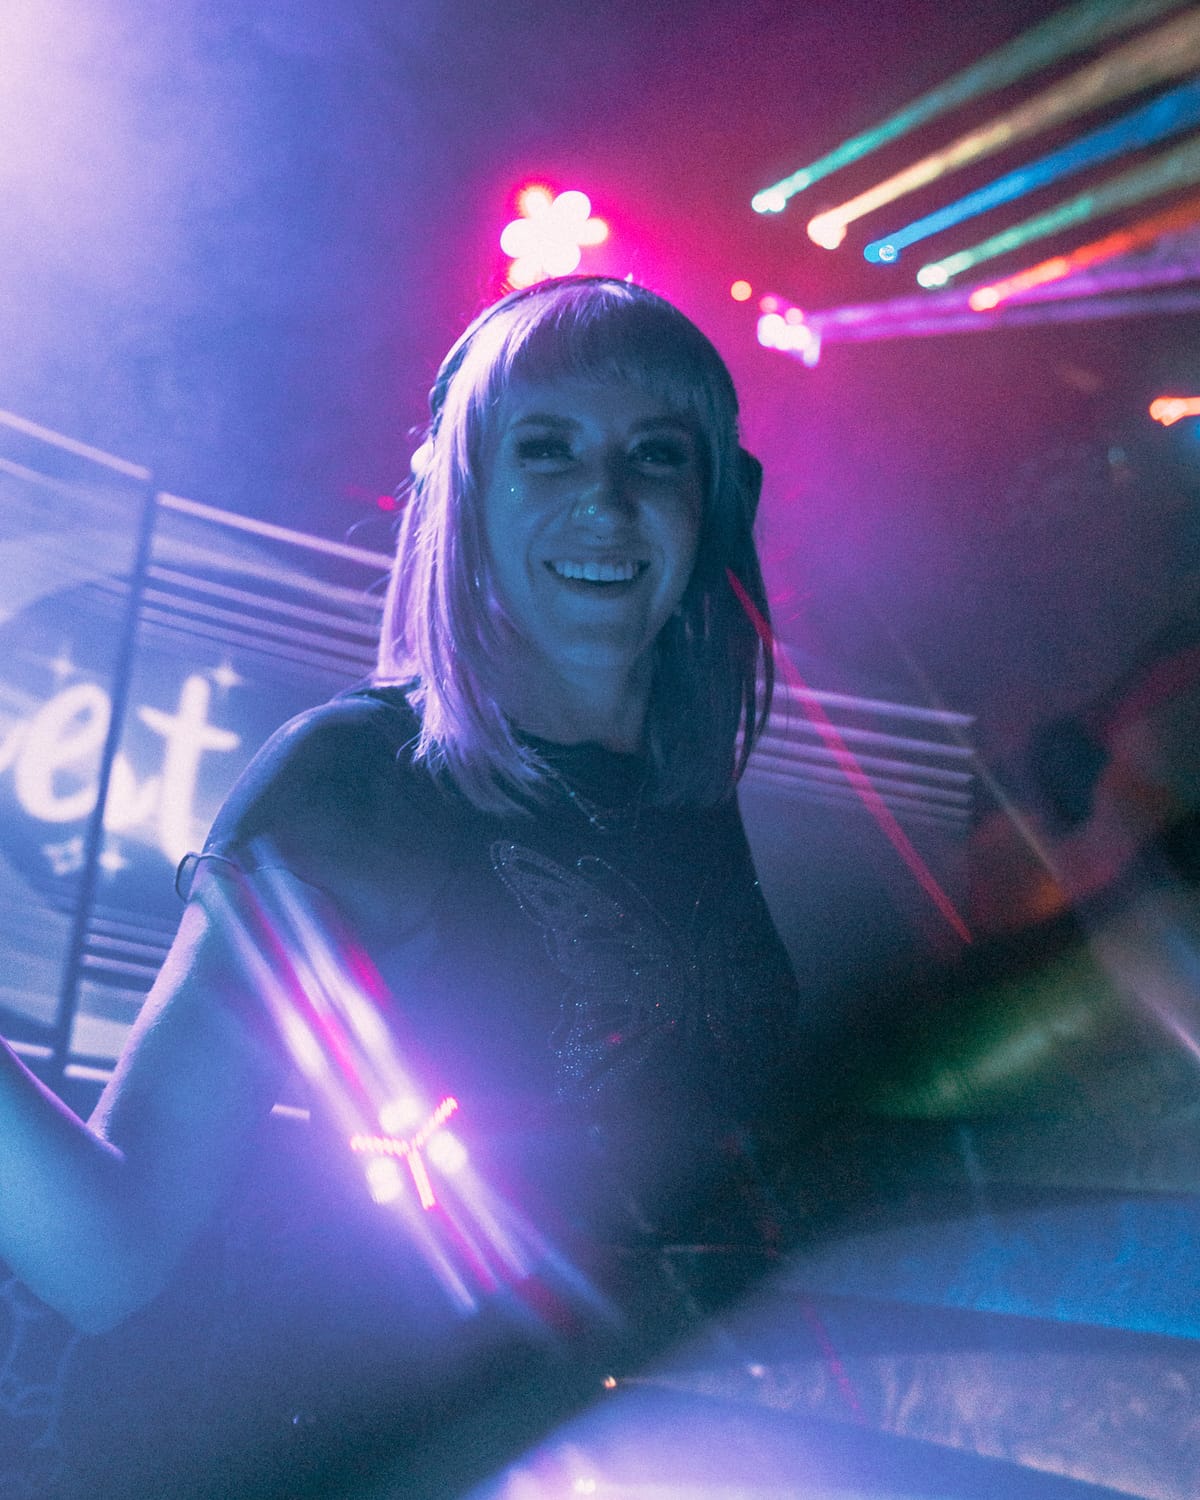 An image of the DJ priestess, Lauren Lofton.